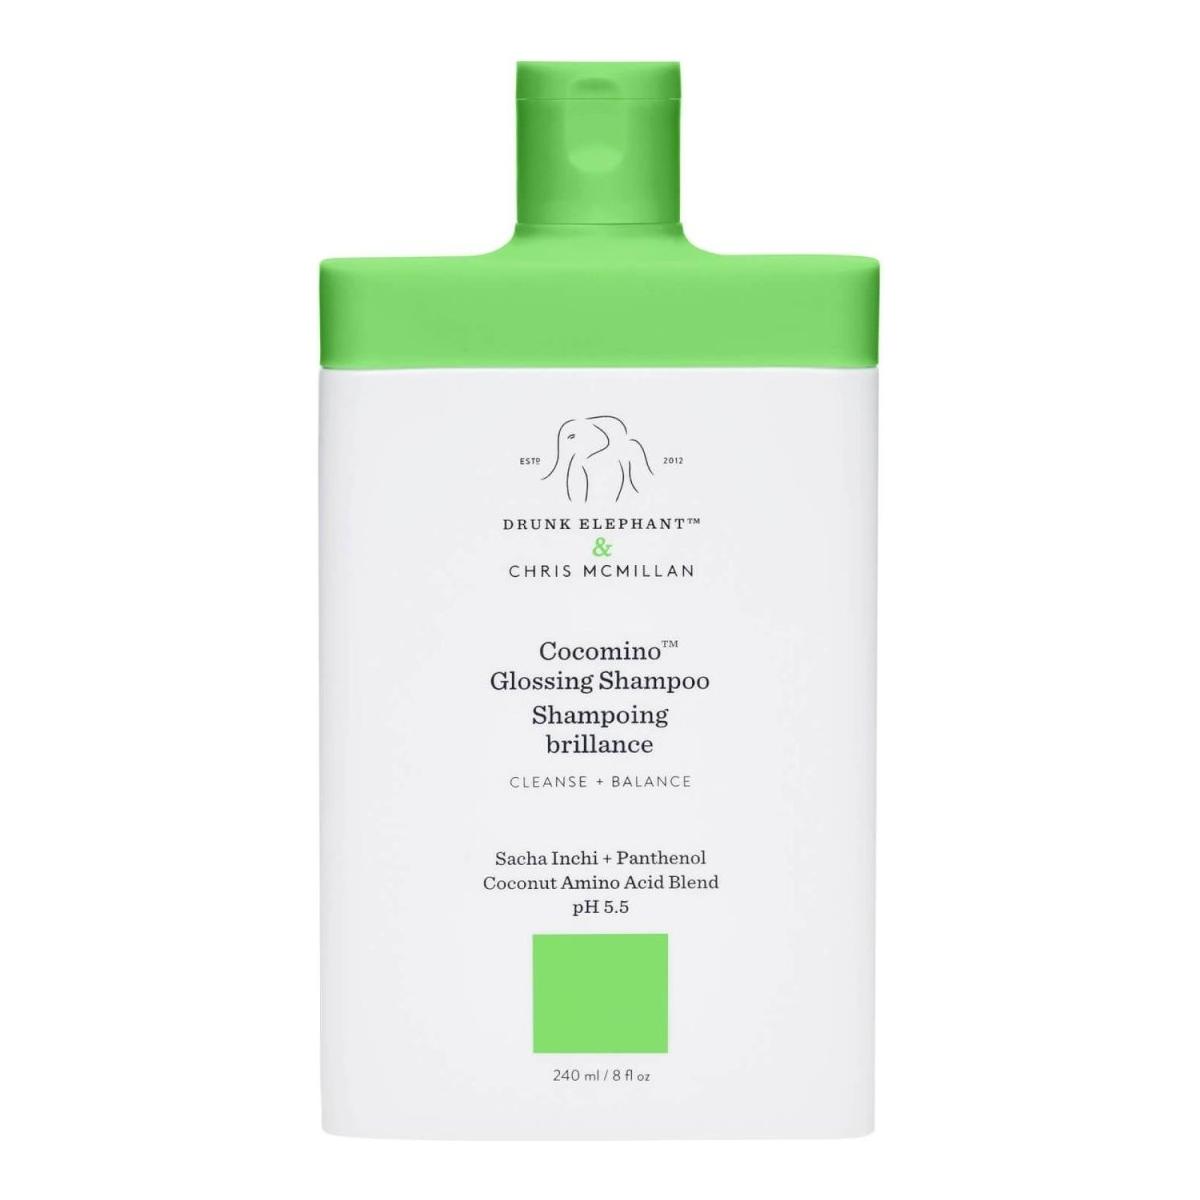 Drunk Elephant Cocomino™ Glossing Shampoo - 240ml - DG International Ventures Limited